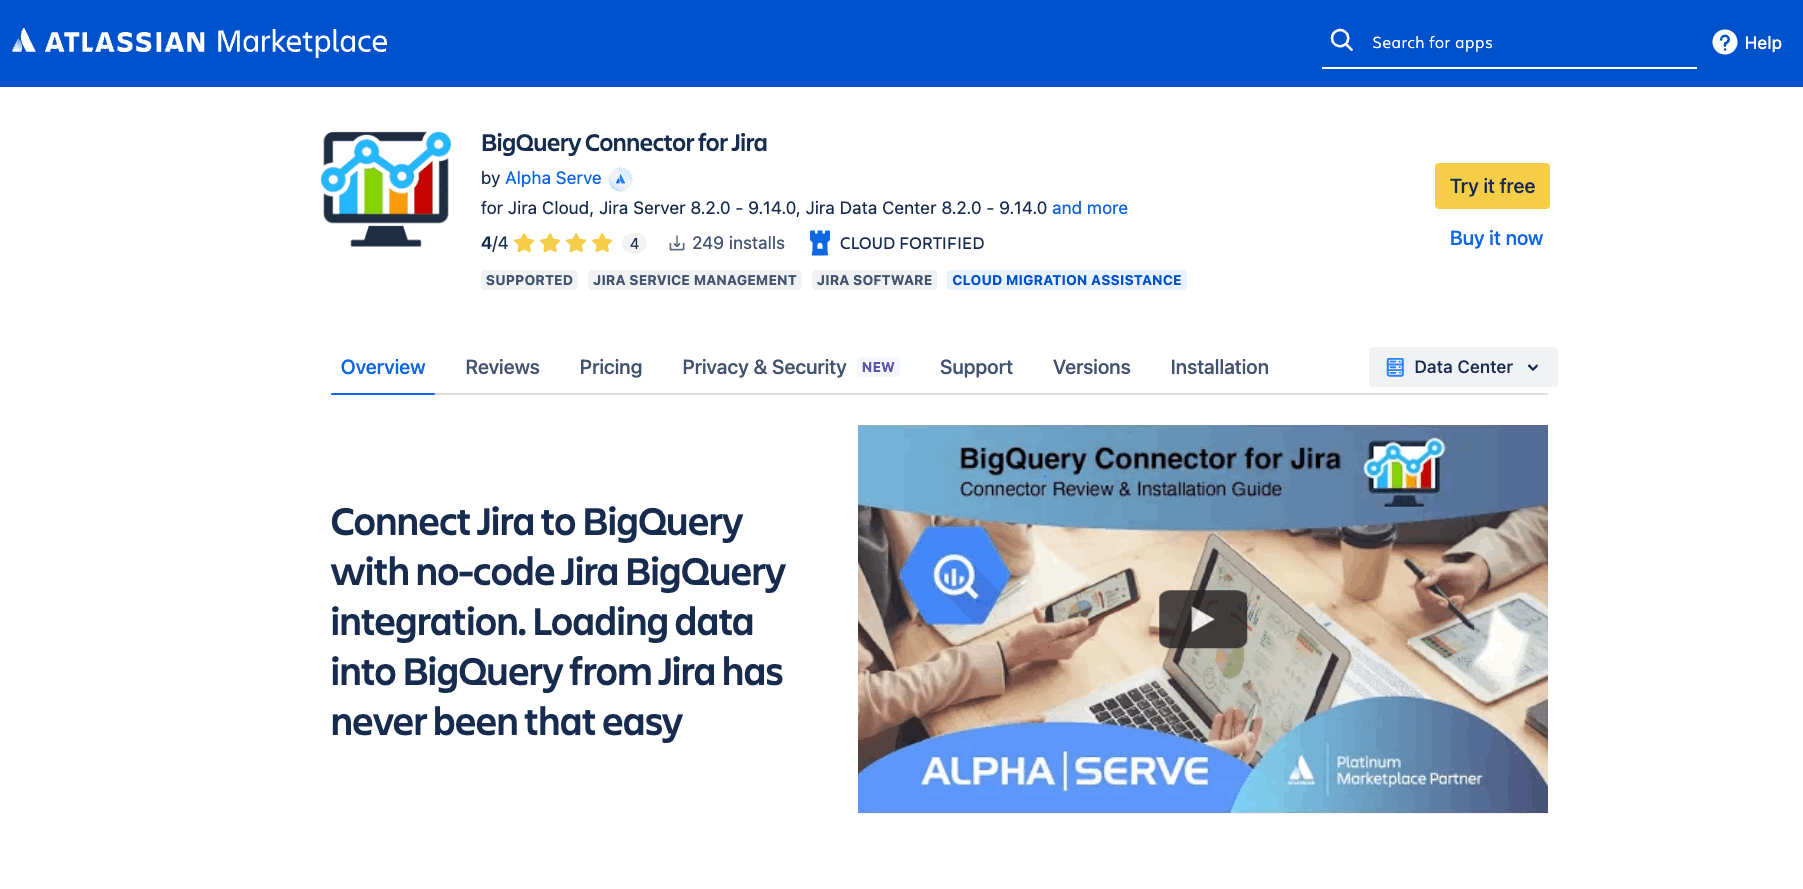 BigQuery - Data Center - Pricing.gif